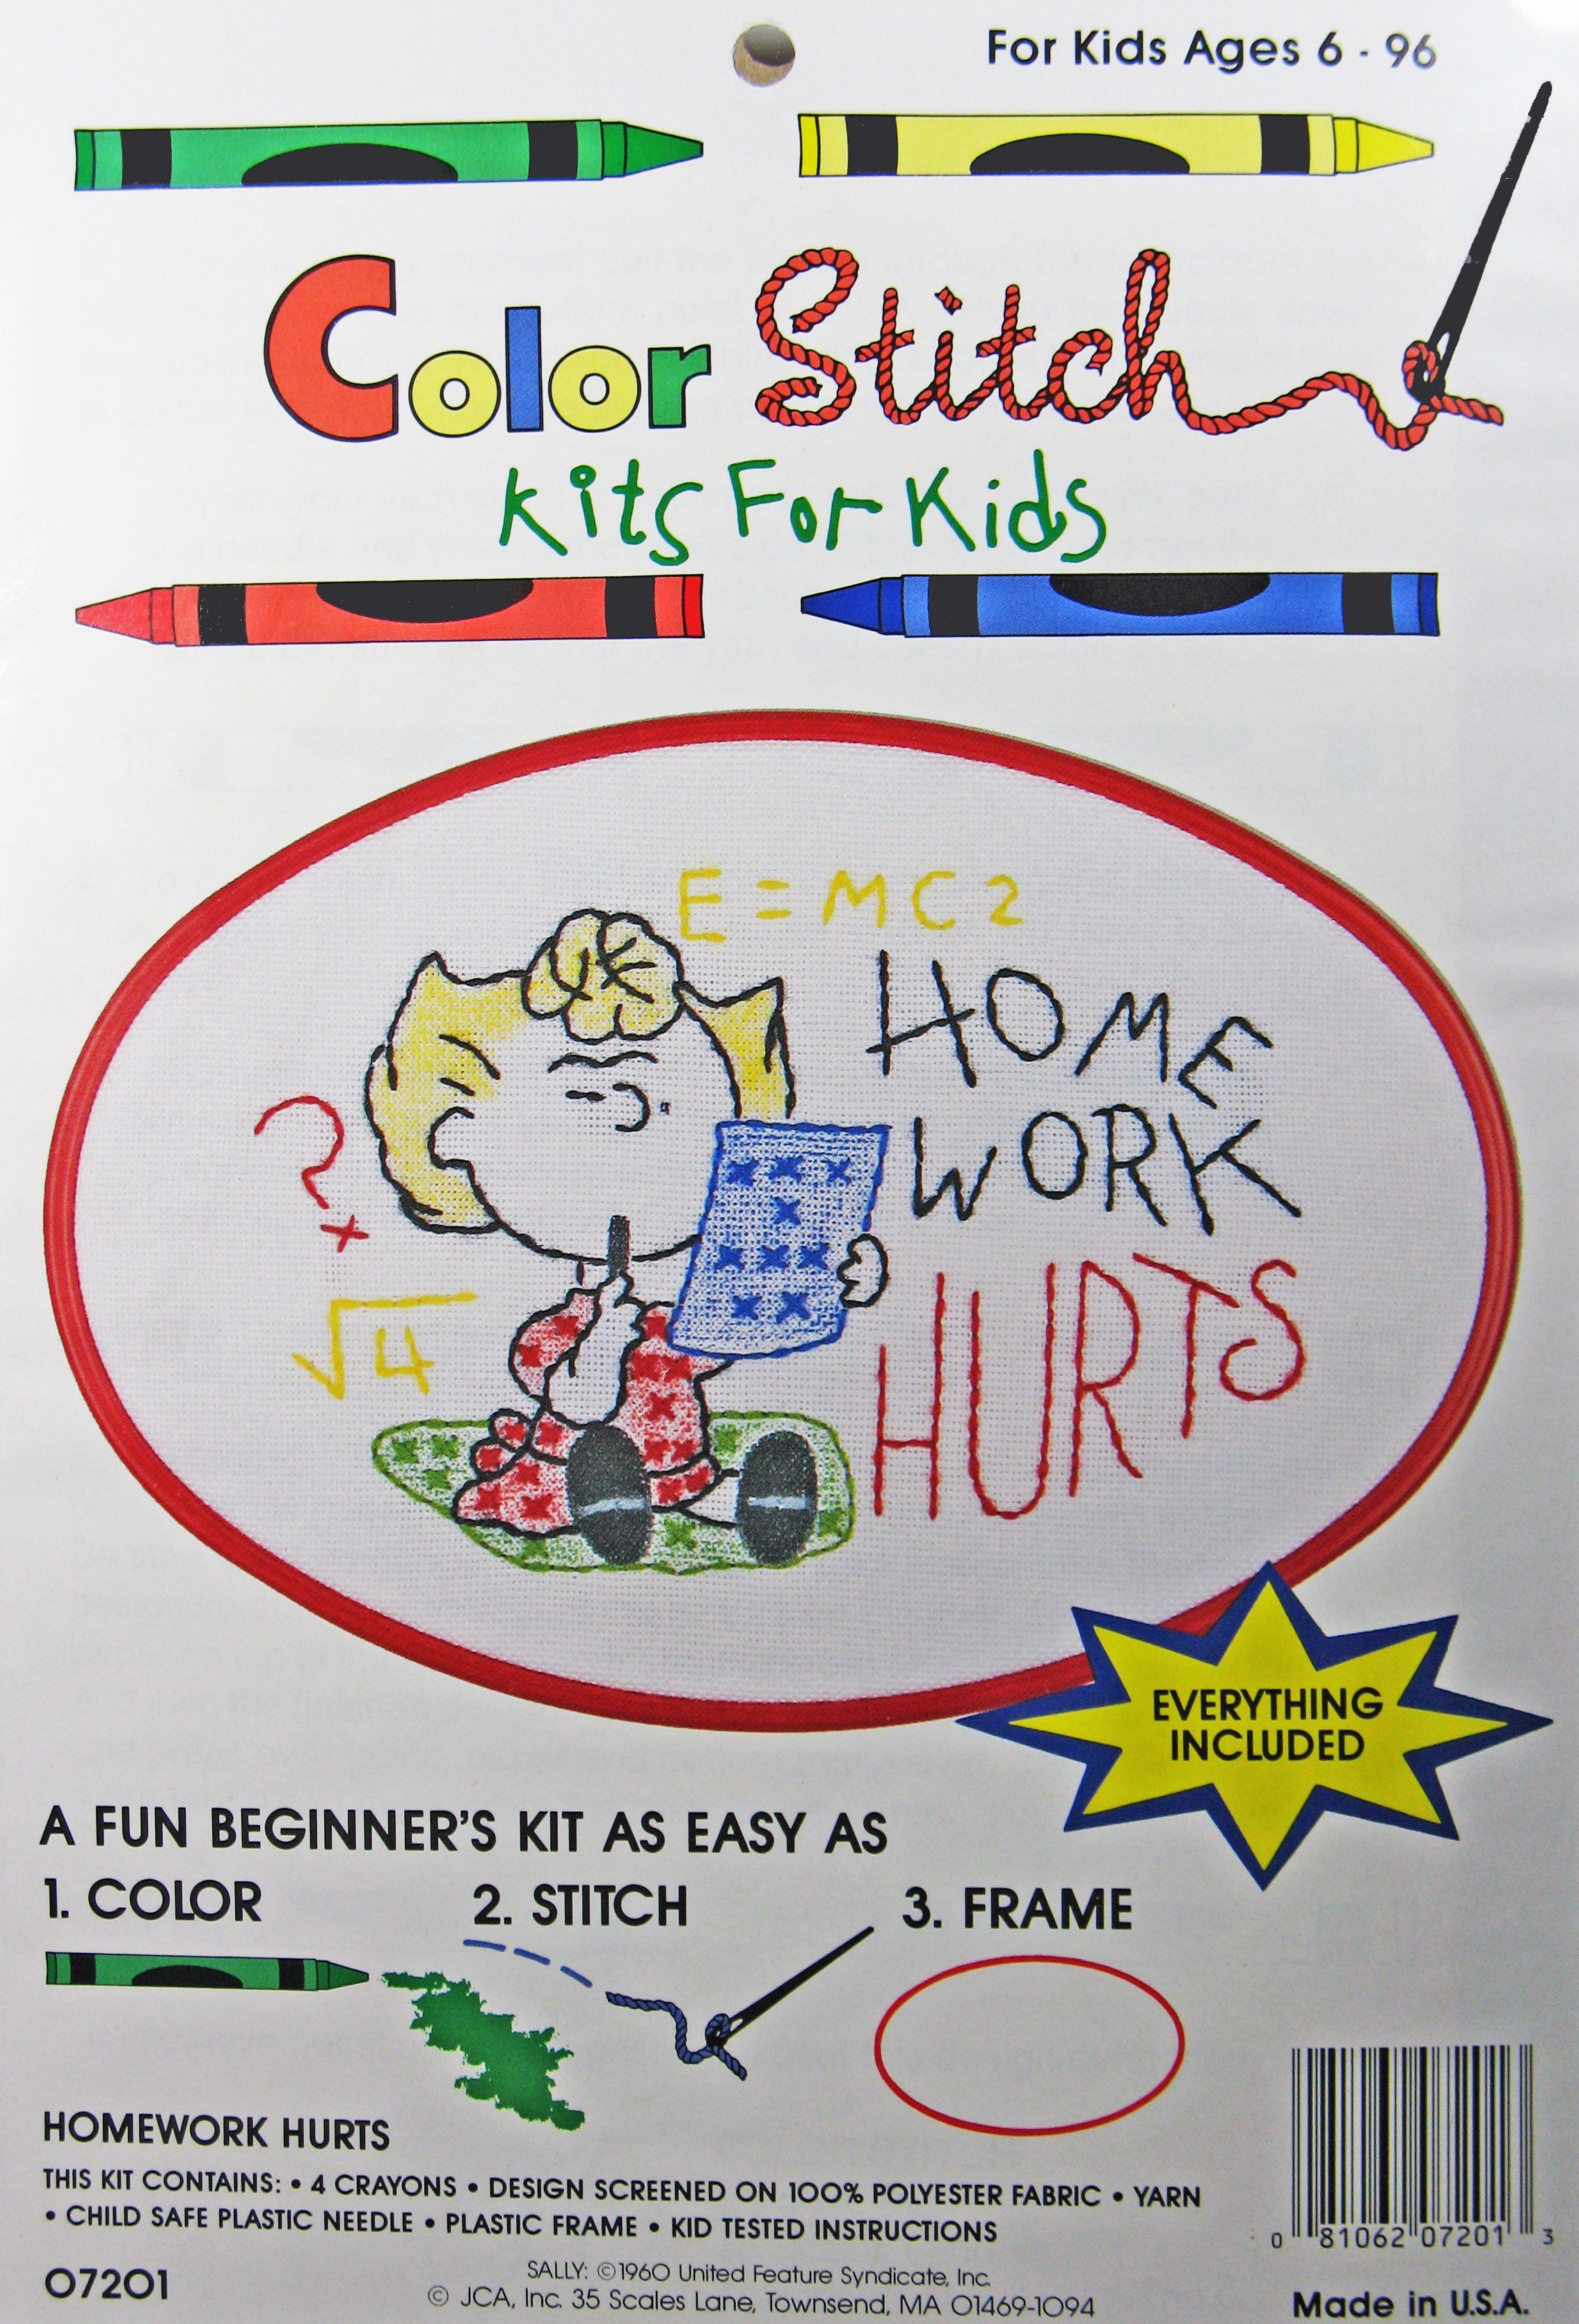 Color Stitch Kit for Kids - Sally (Homework Hurts)